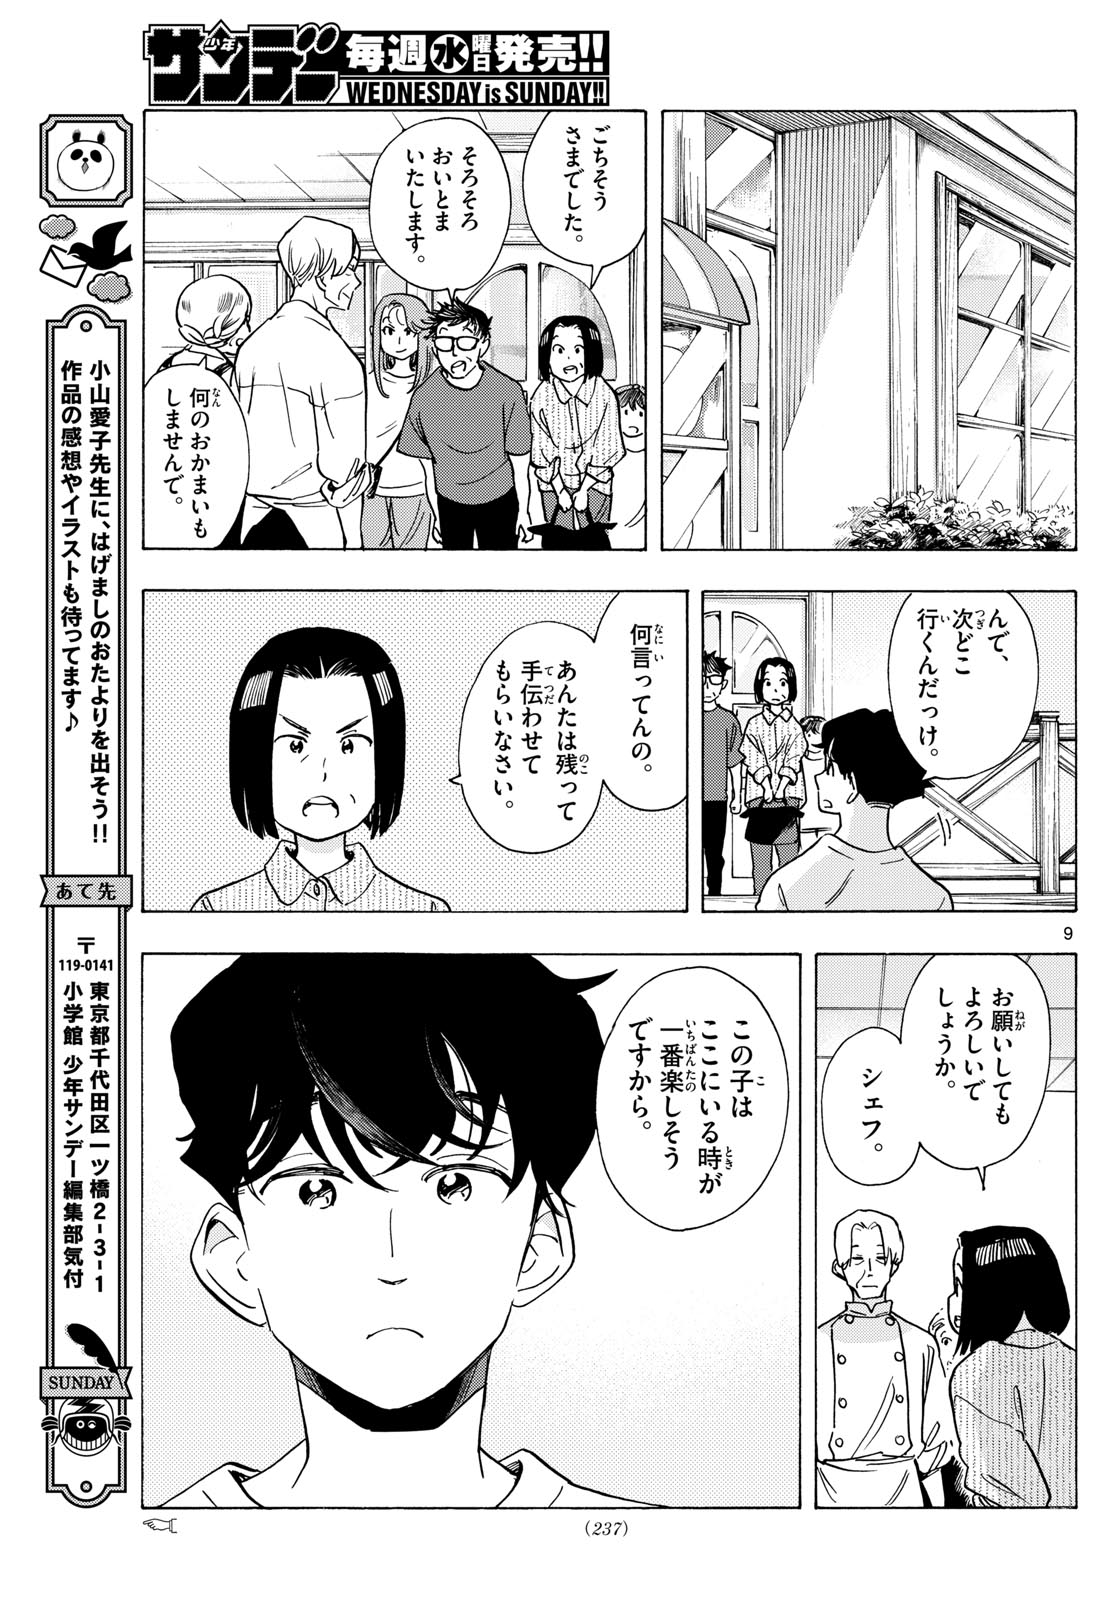 Maiko-san Chi no Makanai-san - Chapter 302 - Page 9